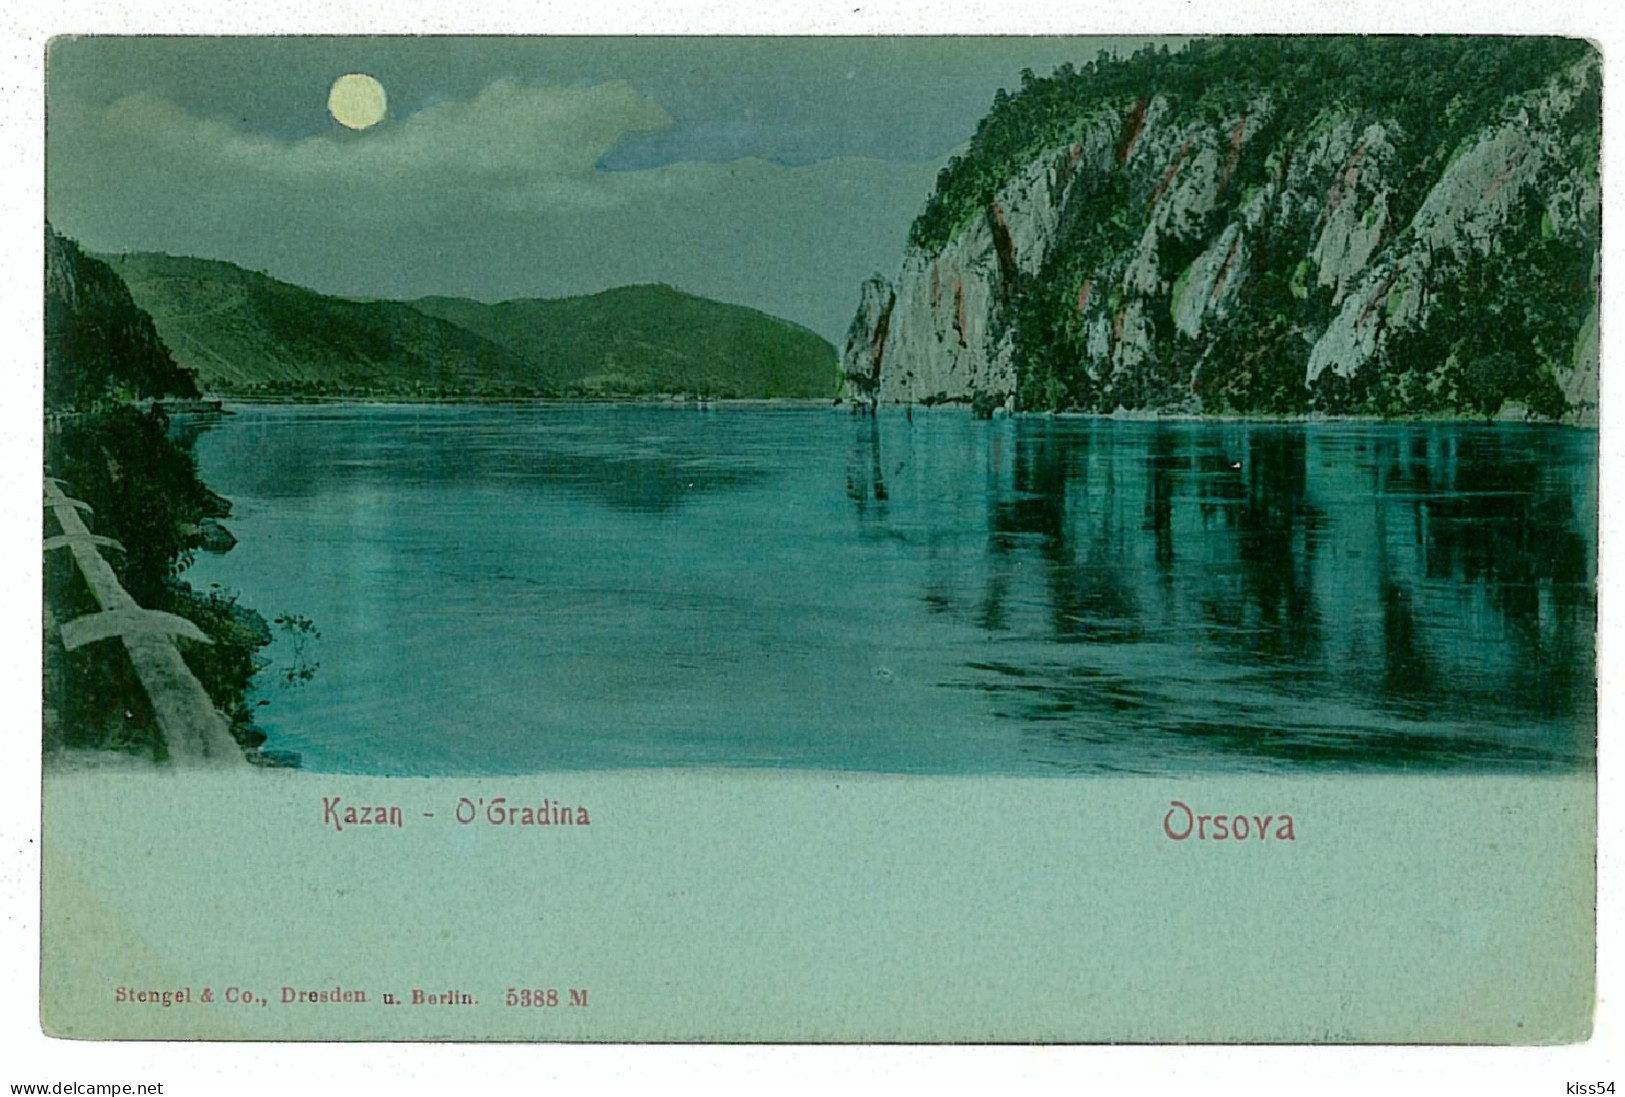 RO 81 - 6295 ORSOVA, Danube Kazan, Litho, Romania - Old Postcard - Unused - Romania